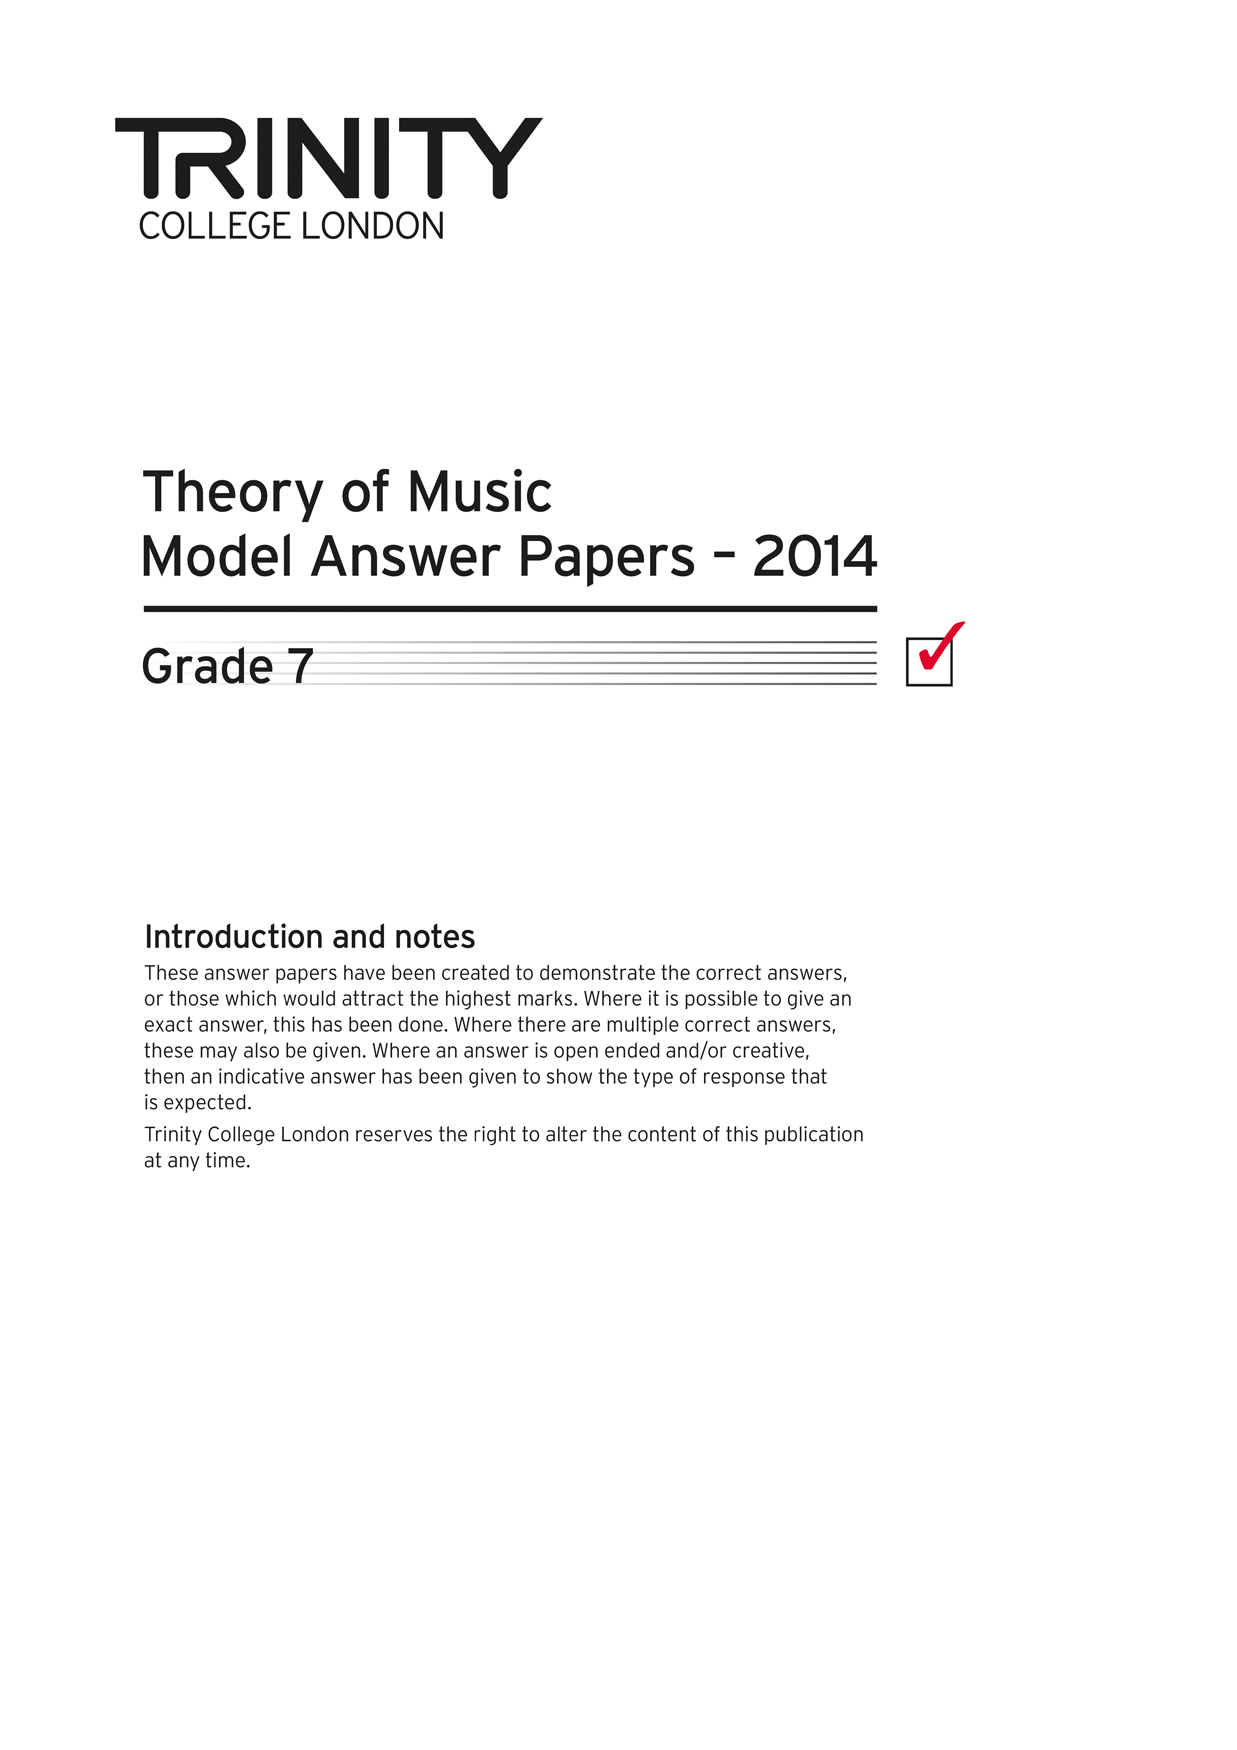 Theory Model Answers 2014 - Grade 7: Theory